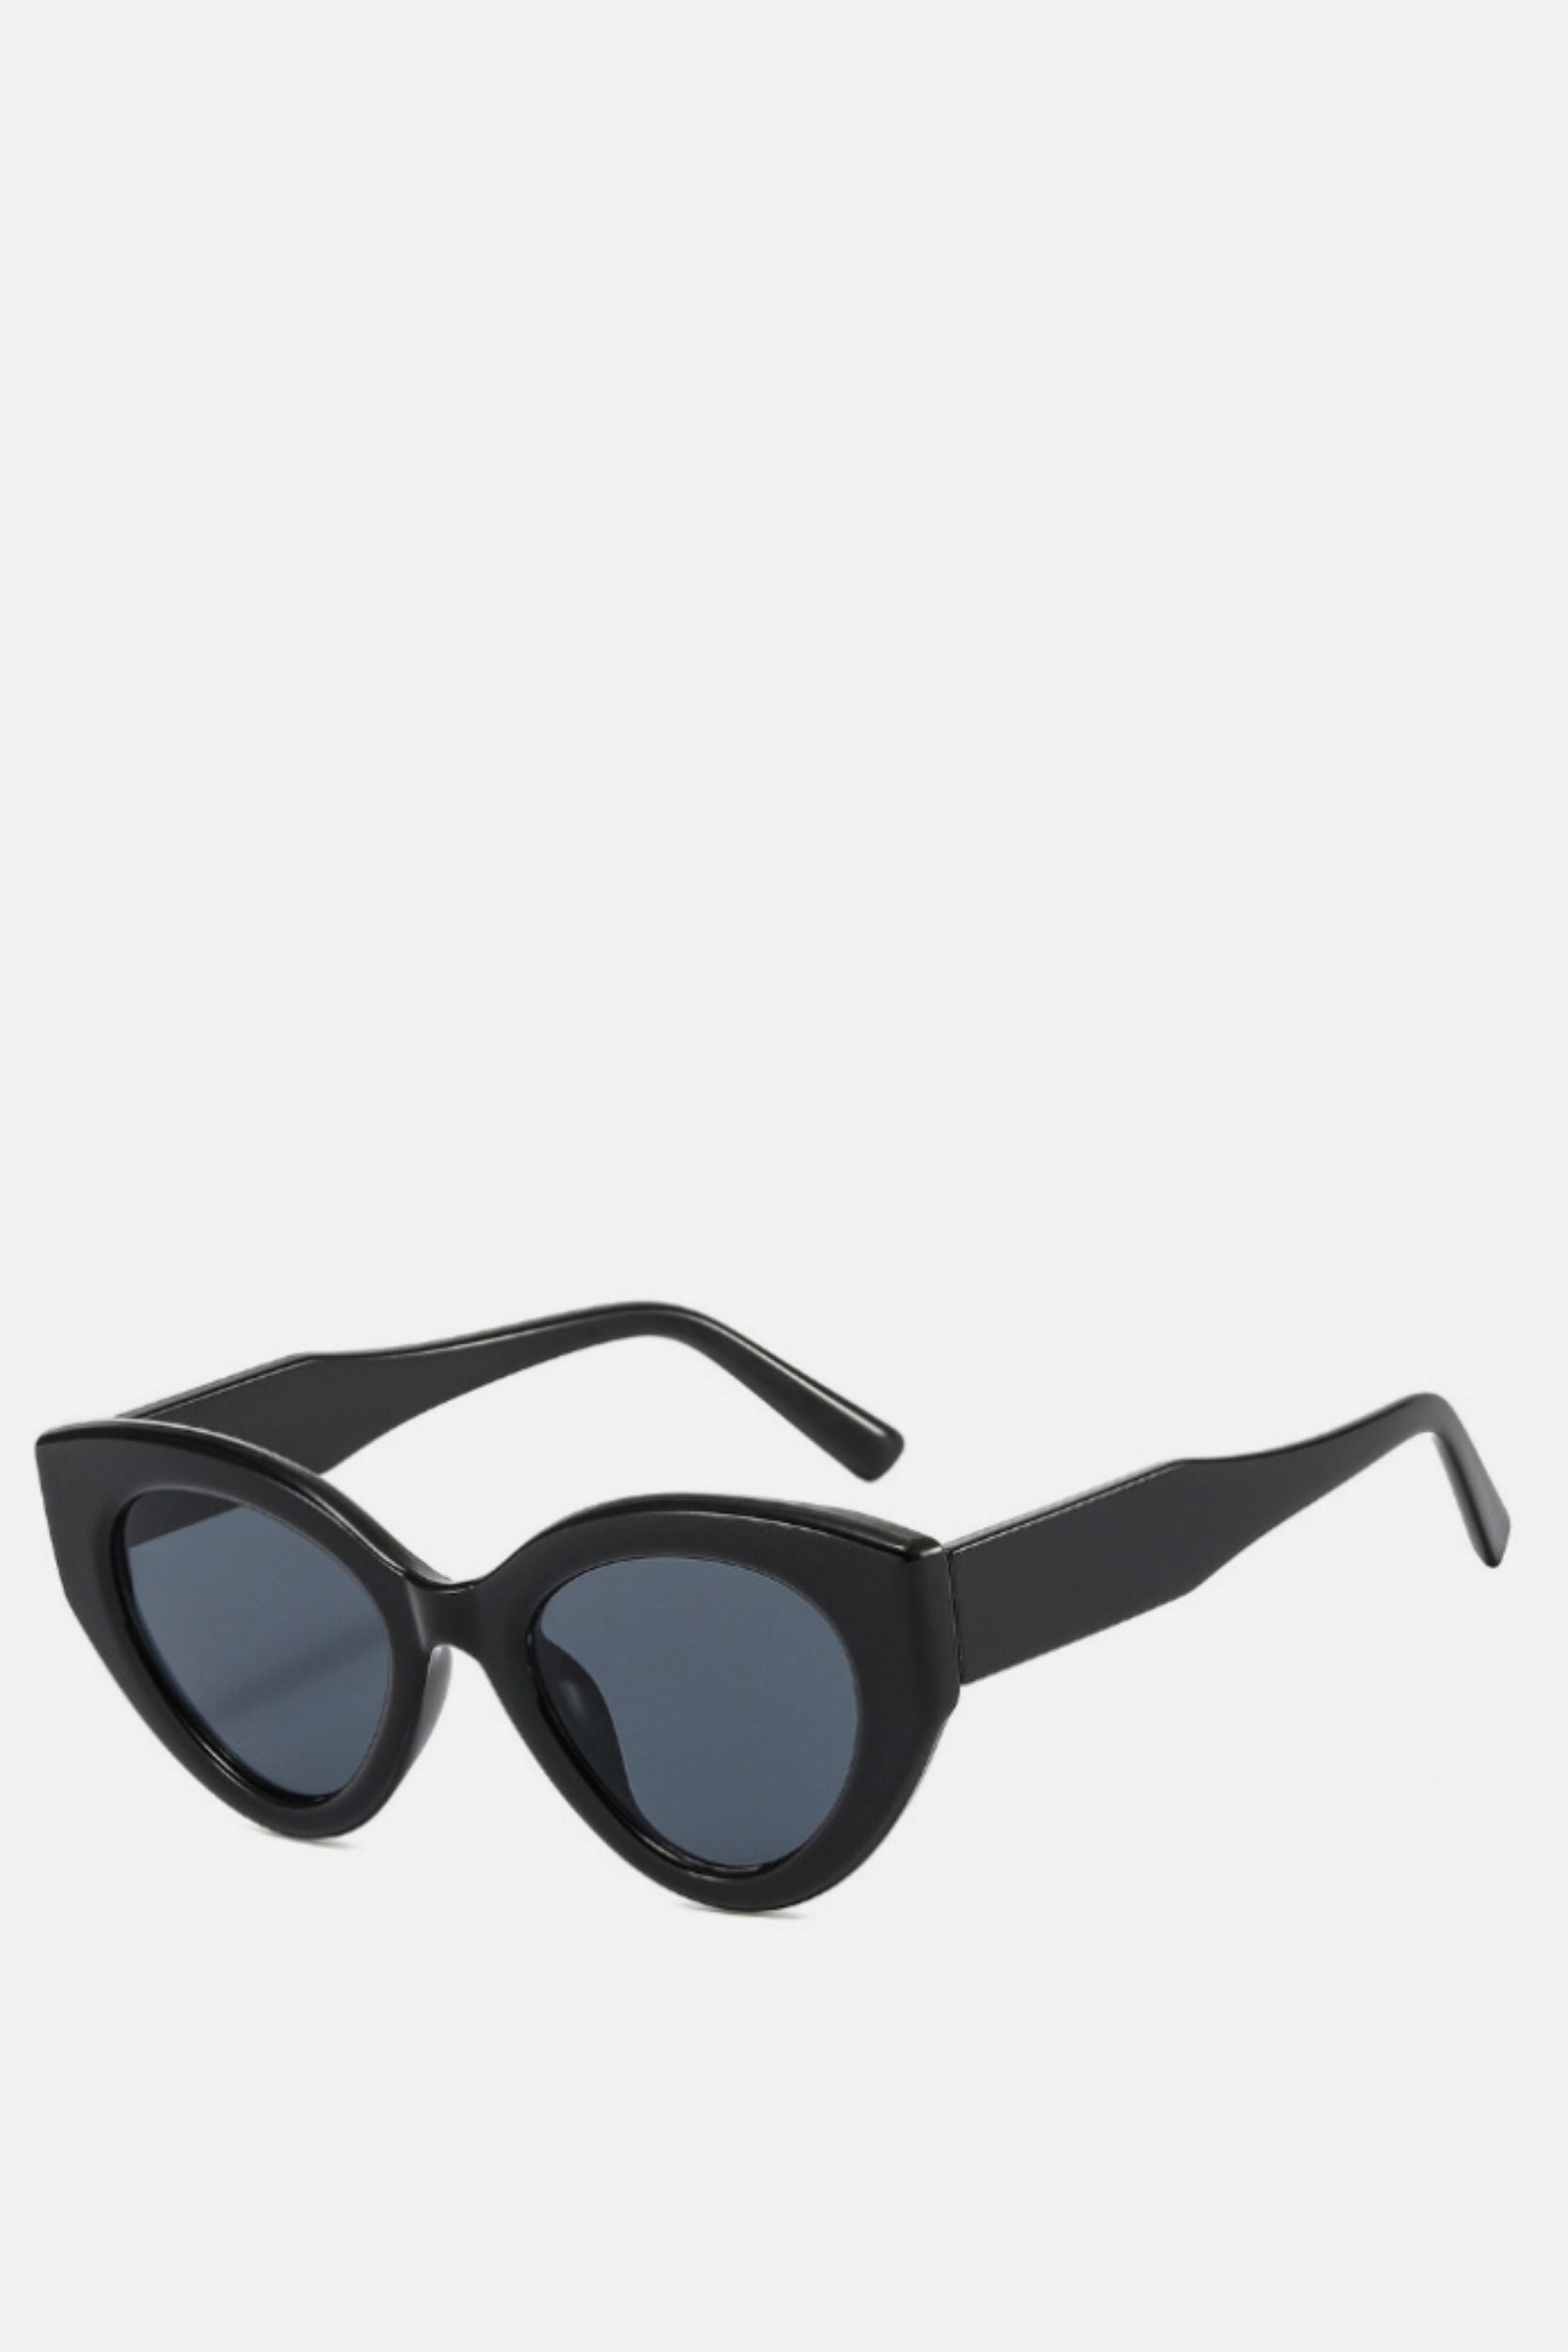 POSITANO Black Oversized Cat Eye Sunglasses